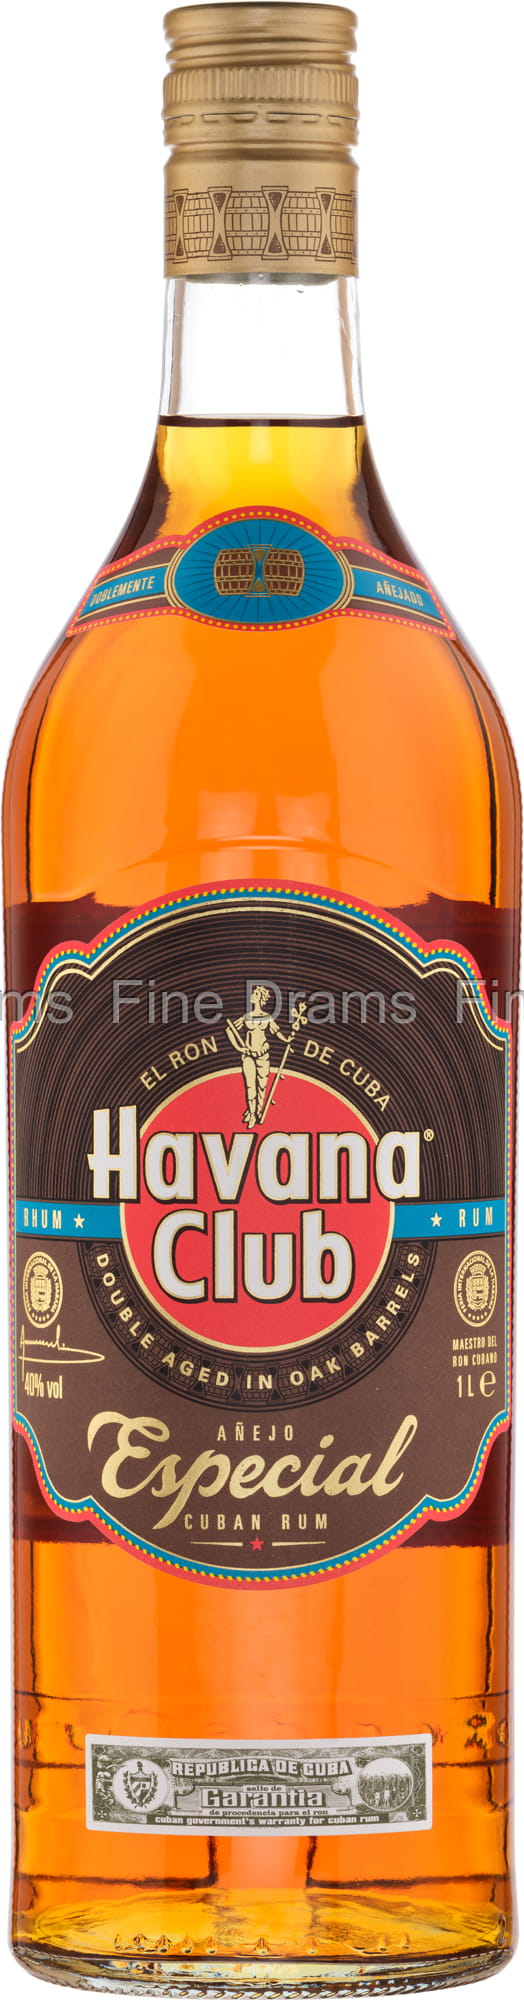 (1 Especial Rum Havana Club Liter) Anejo